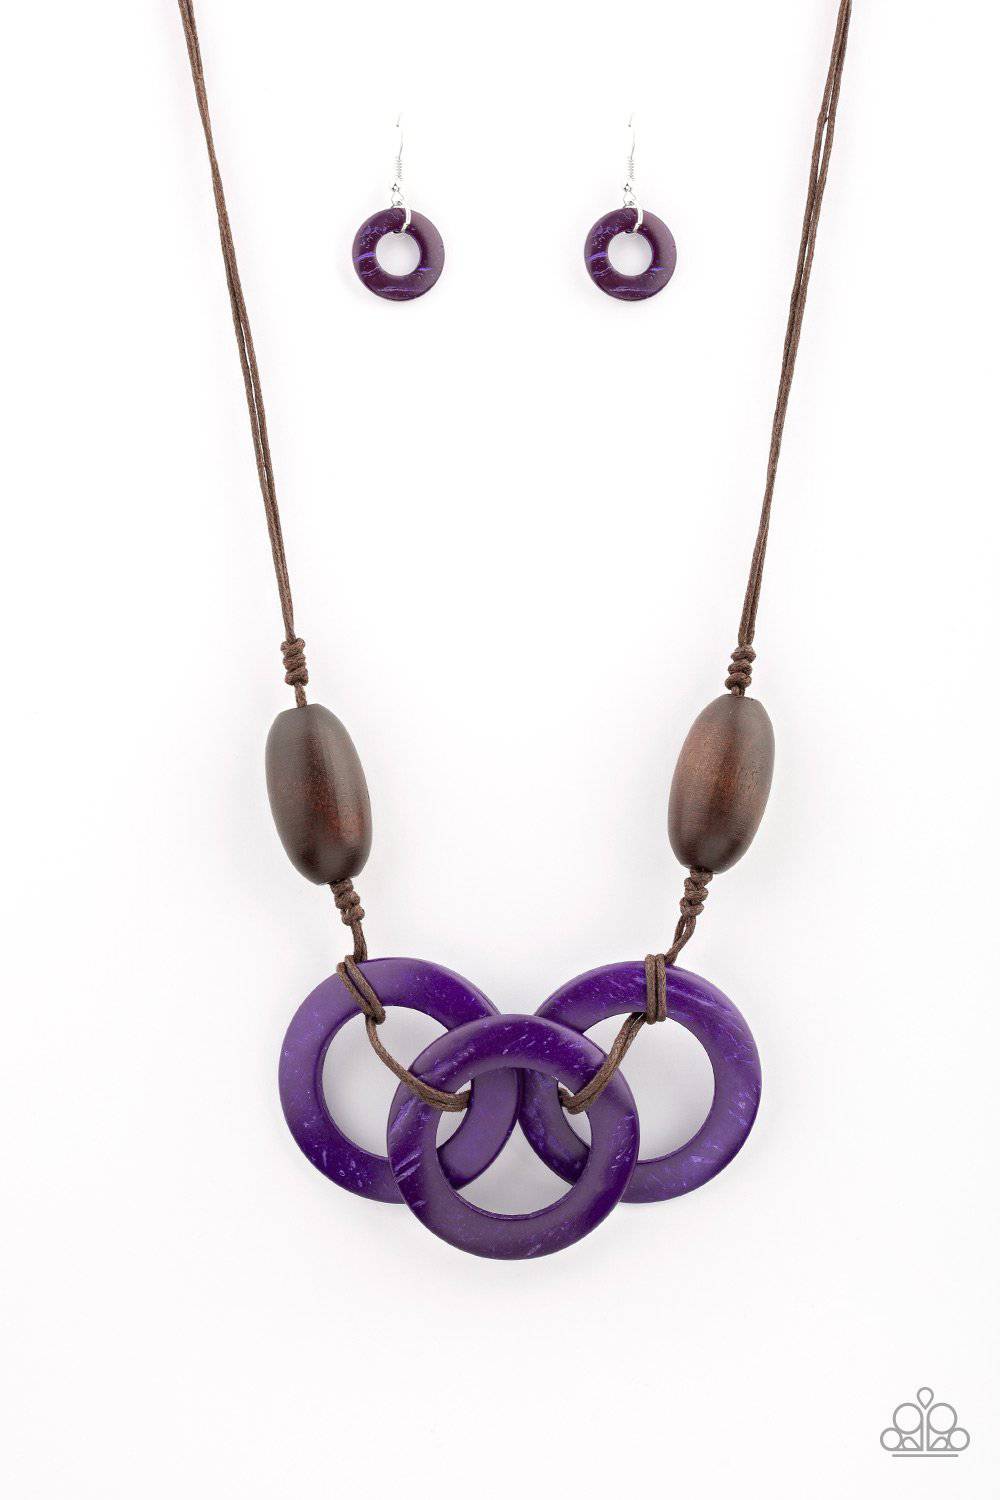 Bahama Drama - Purple Wood Necklace - Paparazzi Accessories - GlaMarous Titi Jewels